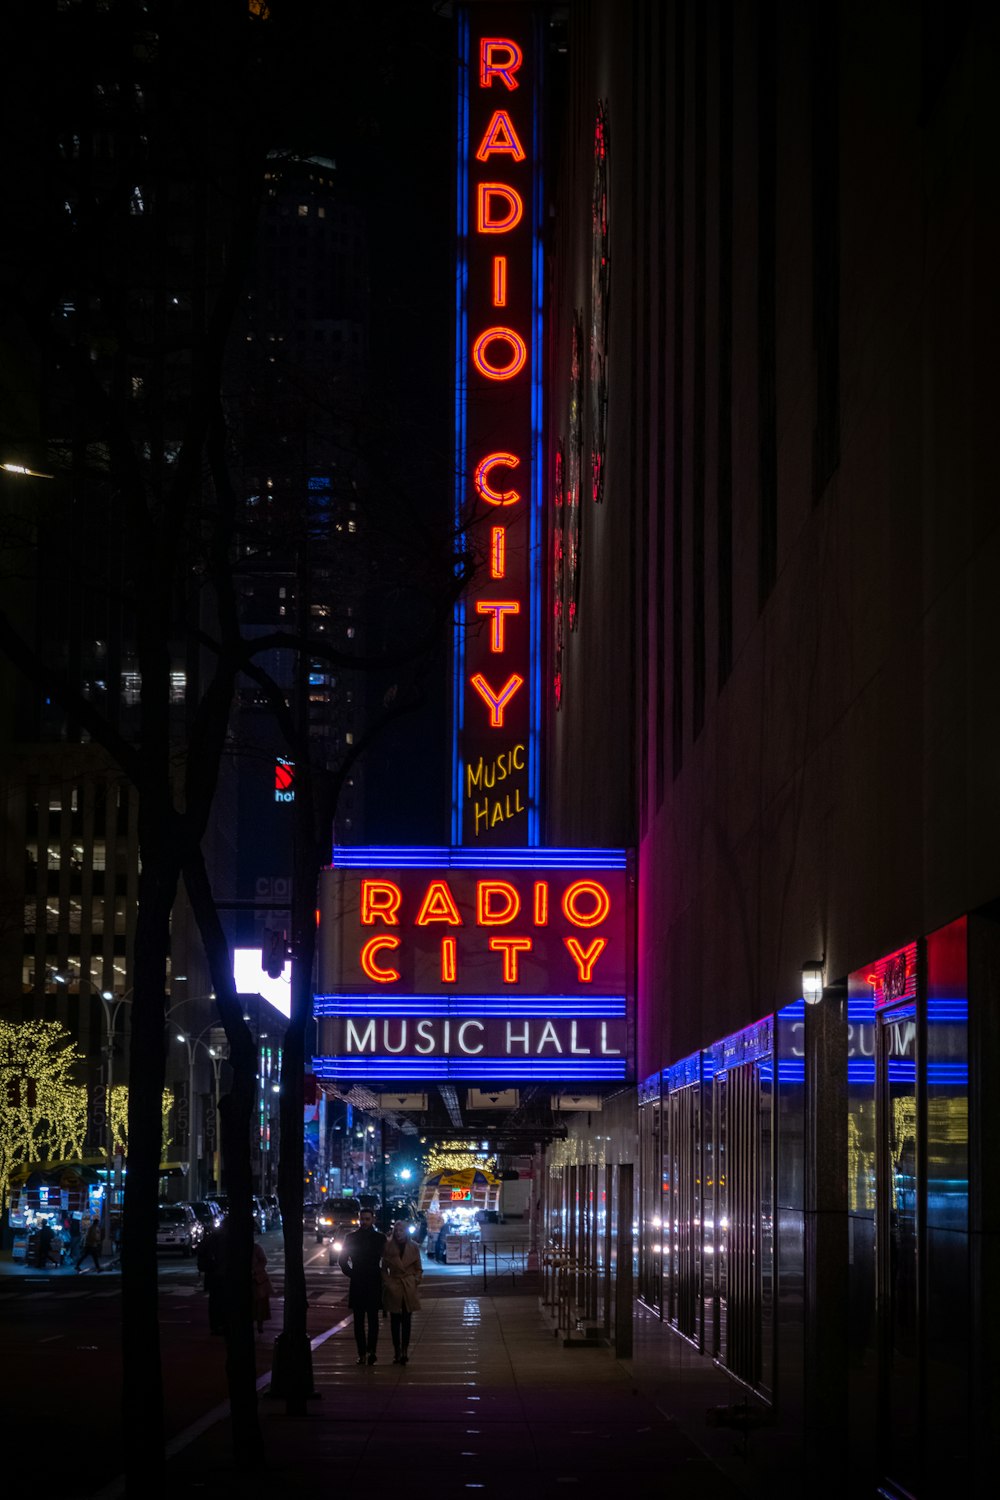 Une enseigne Radio City Radio City illuminée la nuit